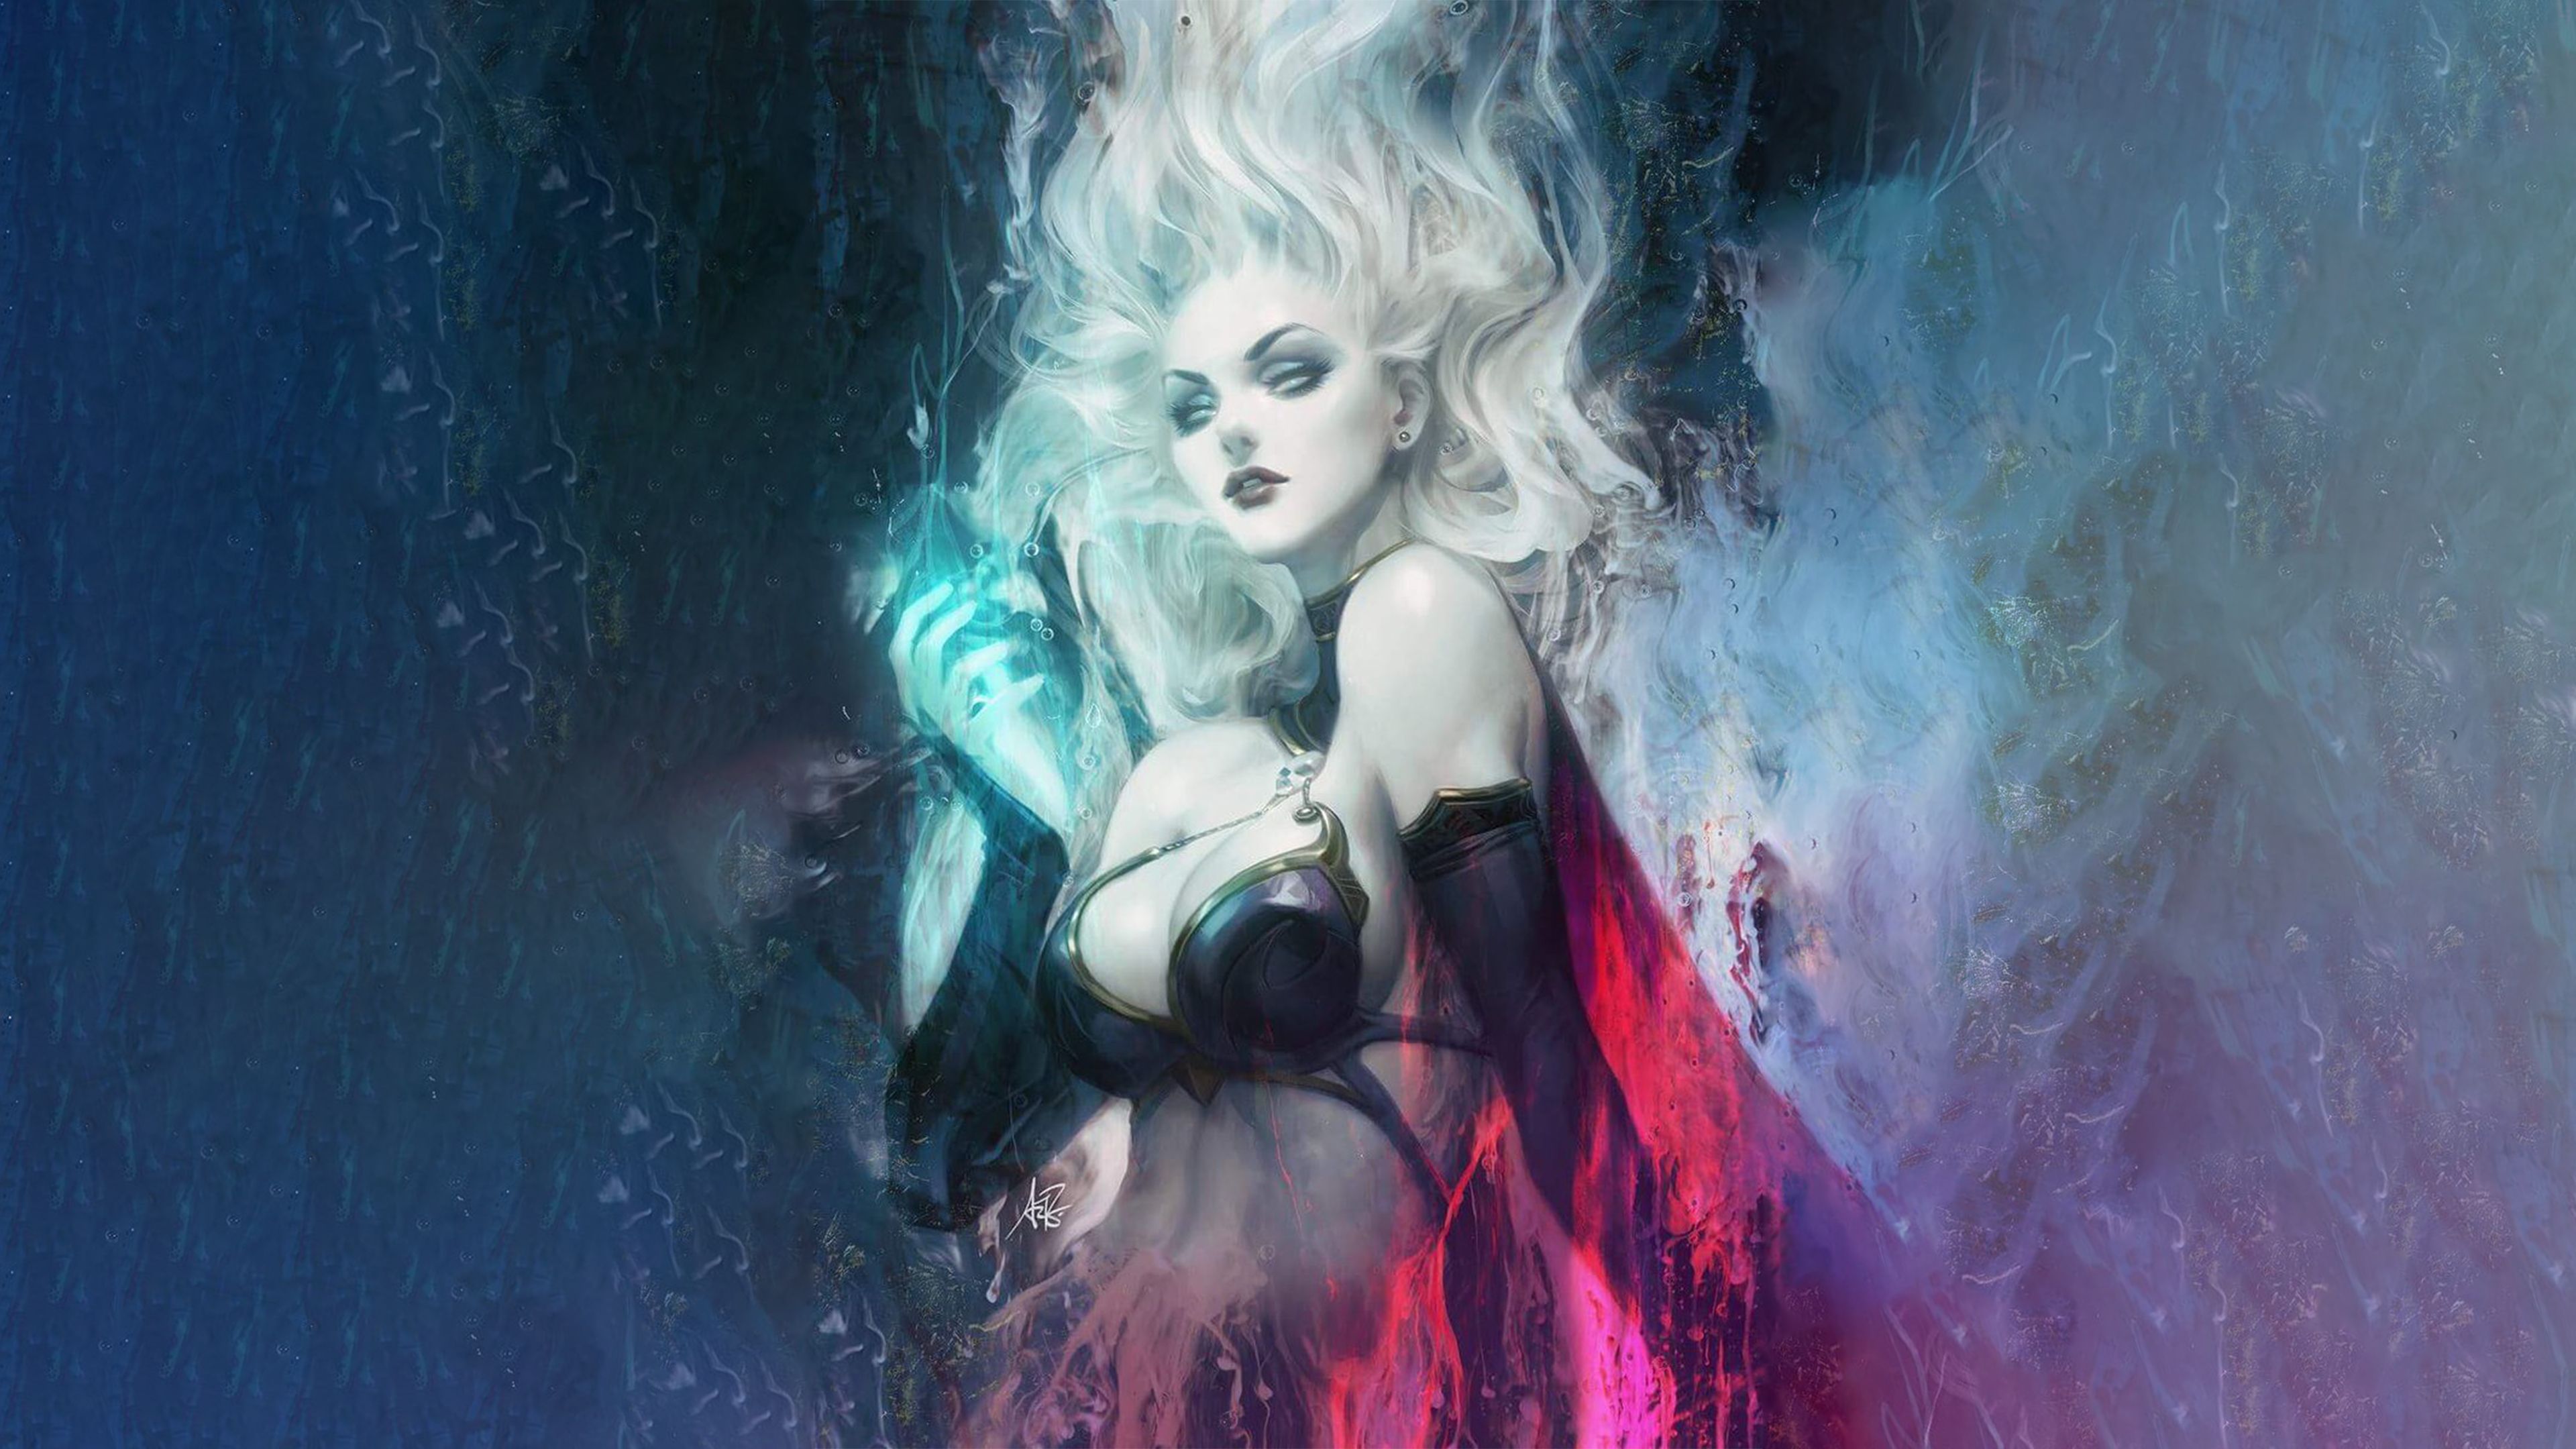 Demon Angel Art Wallpaper, HD Fantasy 4K Wallpaper, Image, Photo and Background